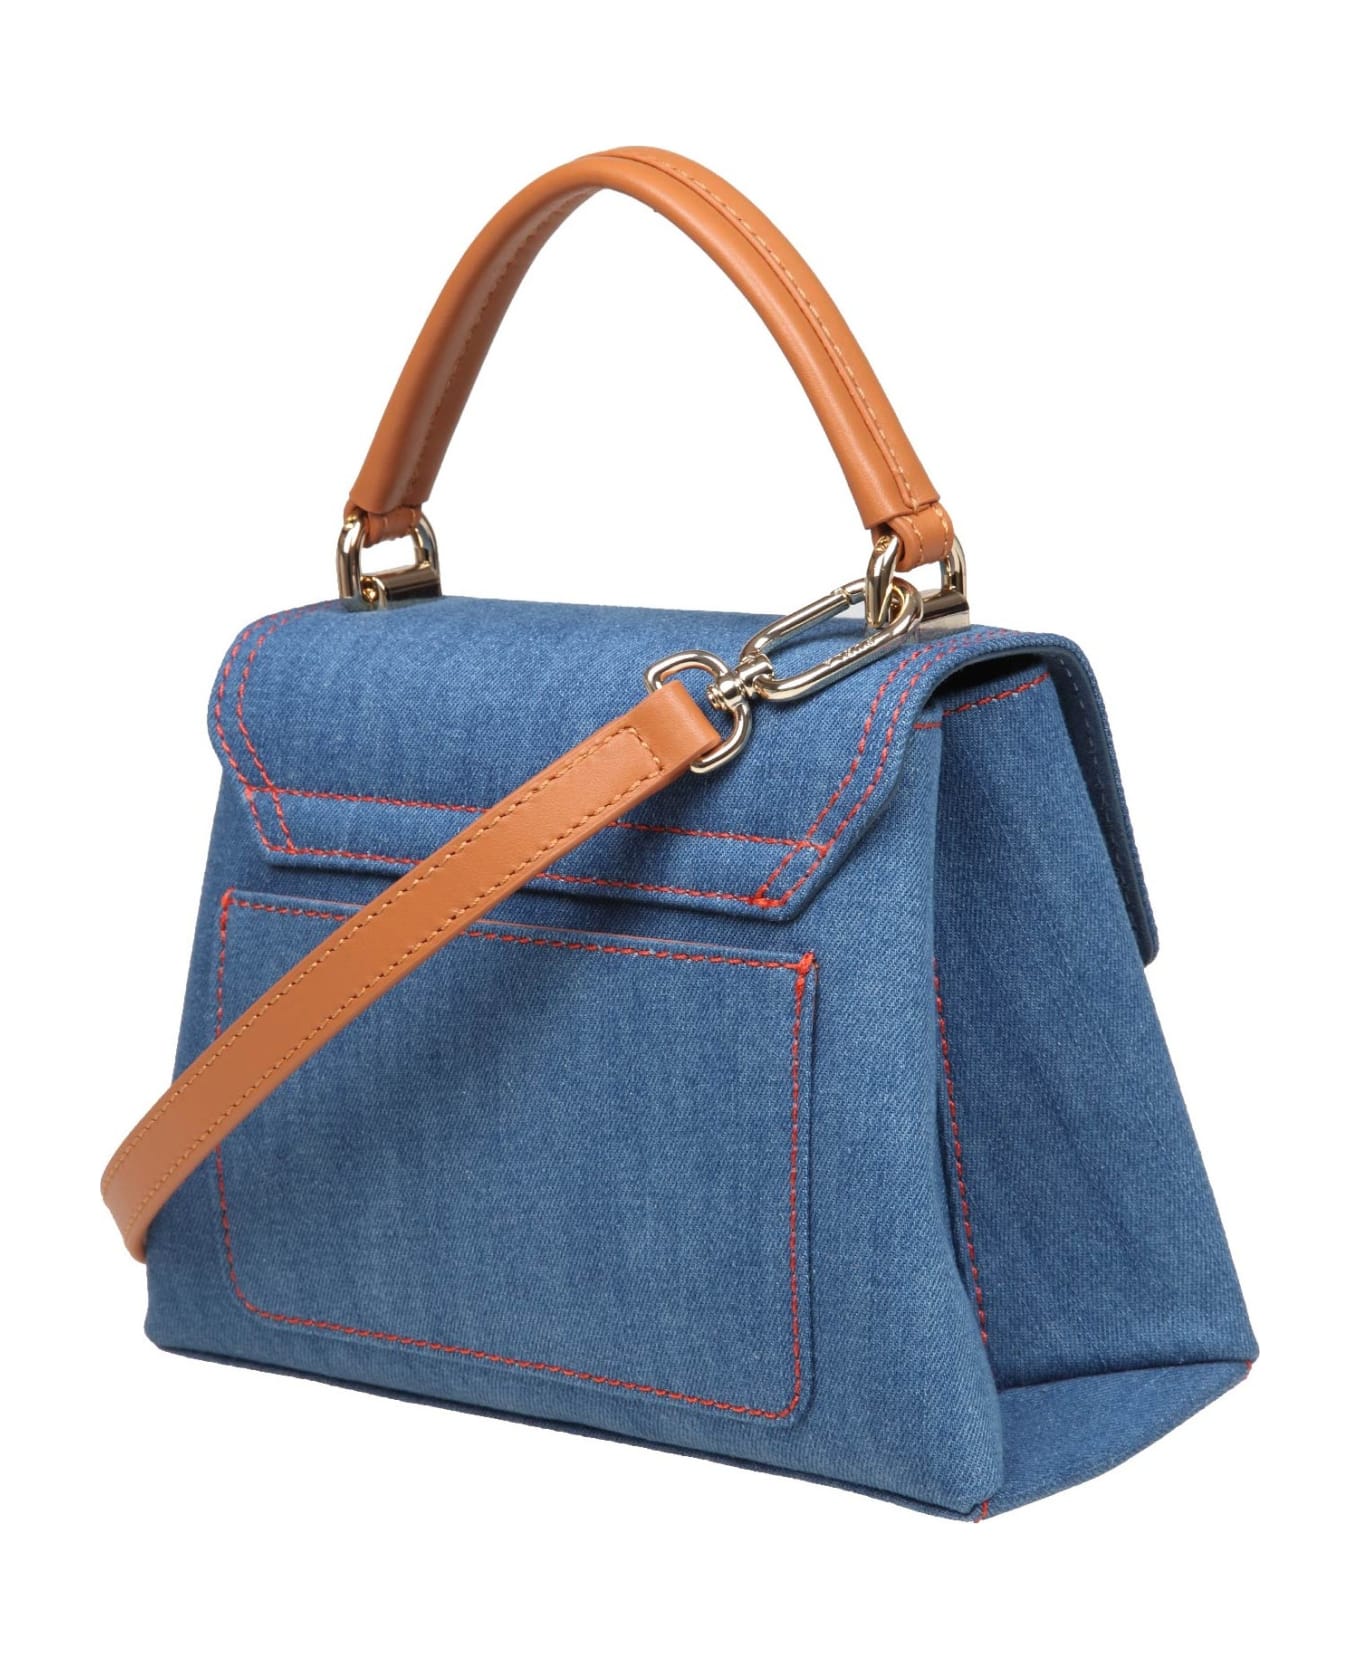 Furla 1927 Mini Handbag In Blue Jeans Fabric - Mediterranean blue